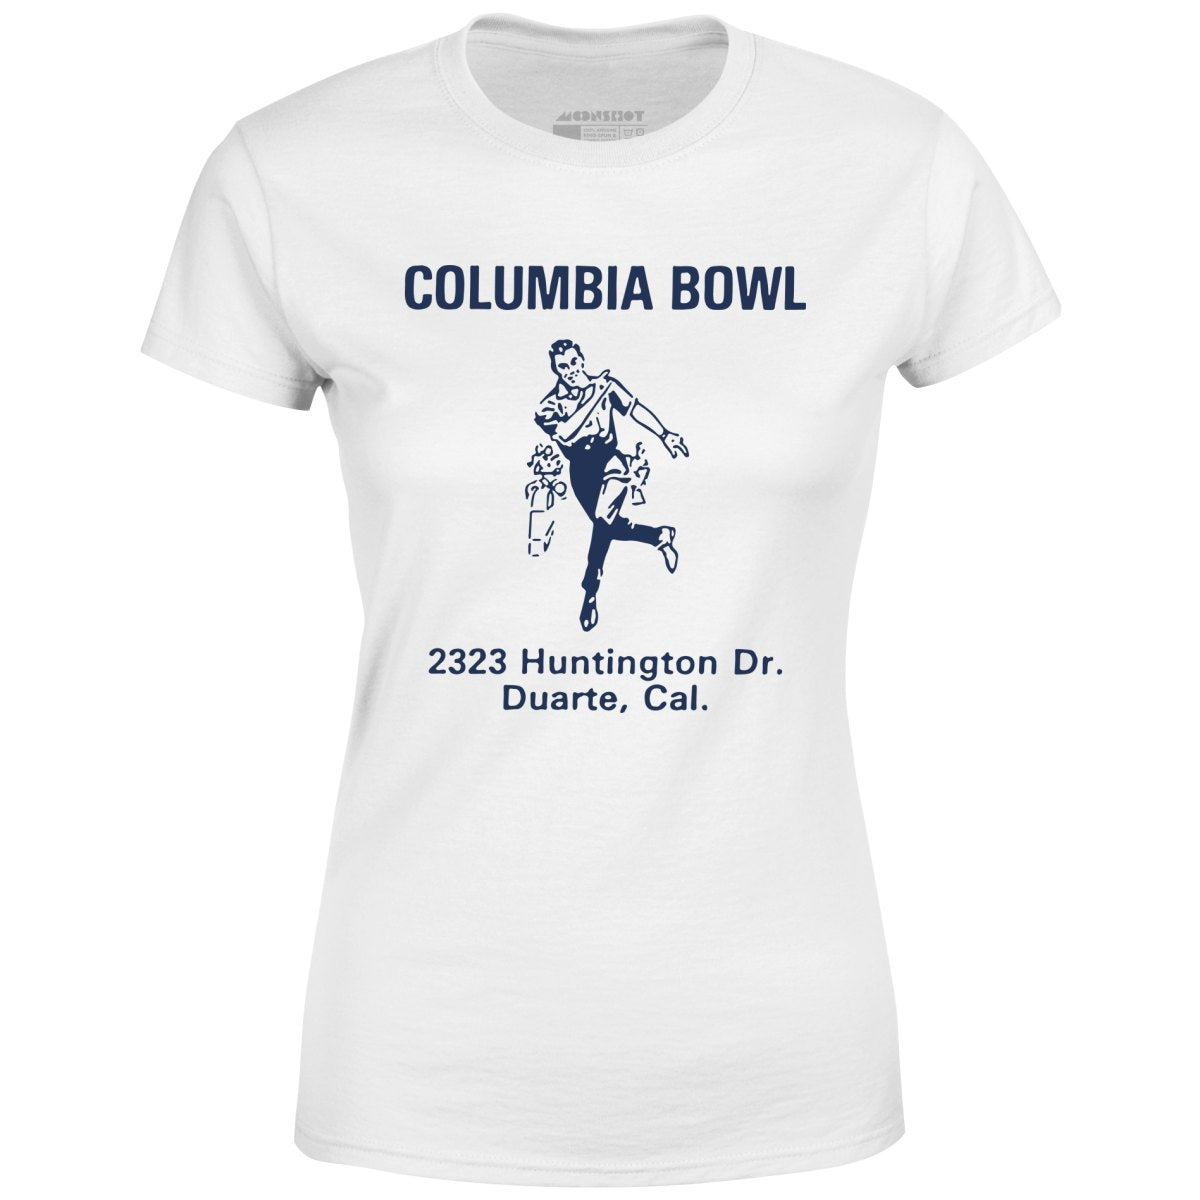 Columbia Bowl - Duarte, CA - Vintage Bowling Alley - Women's T-Shirt